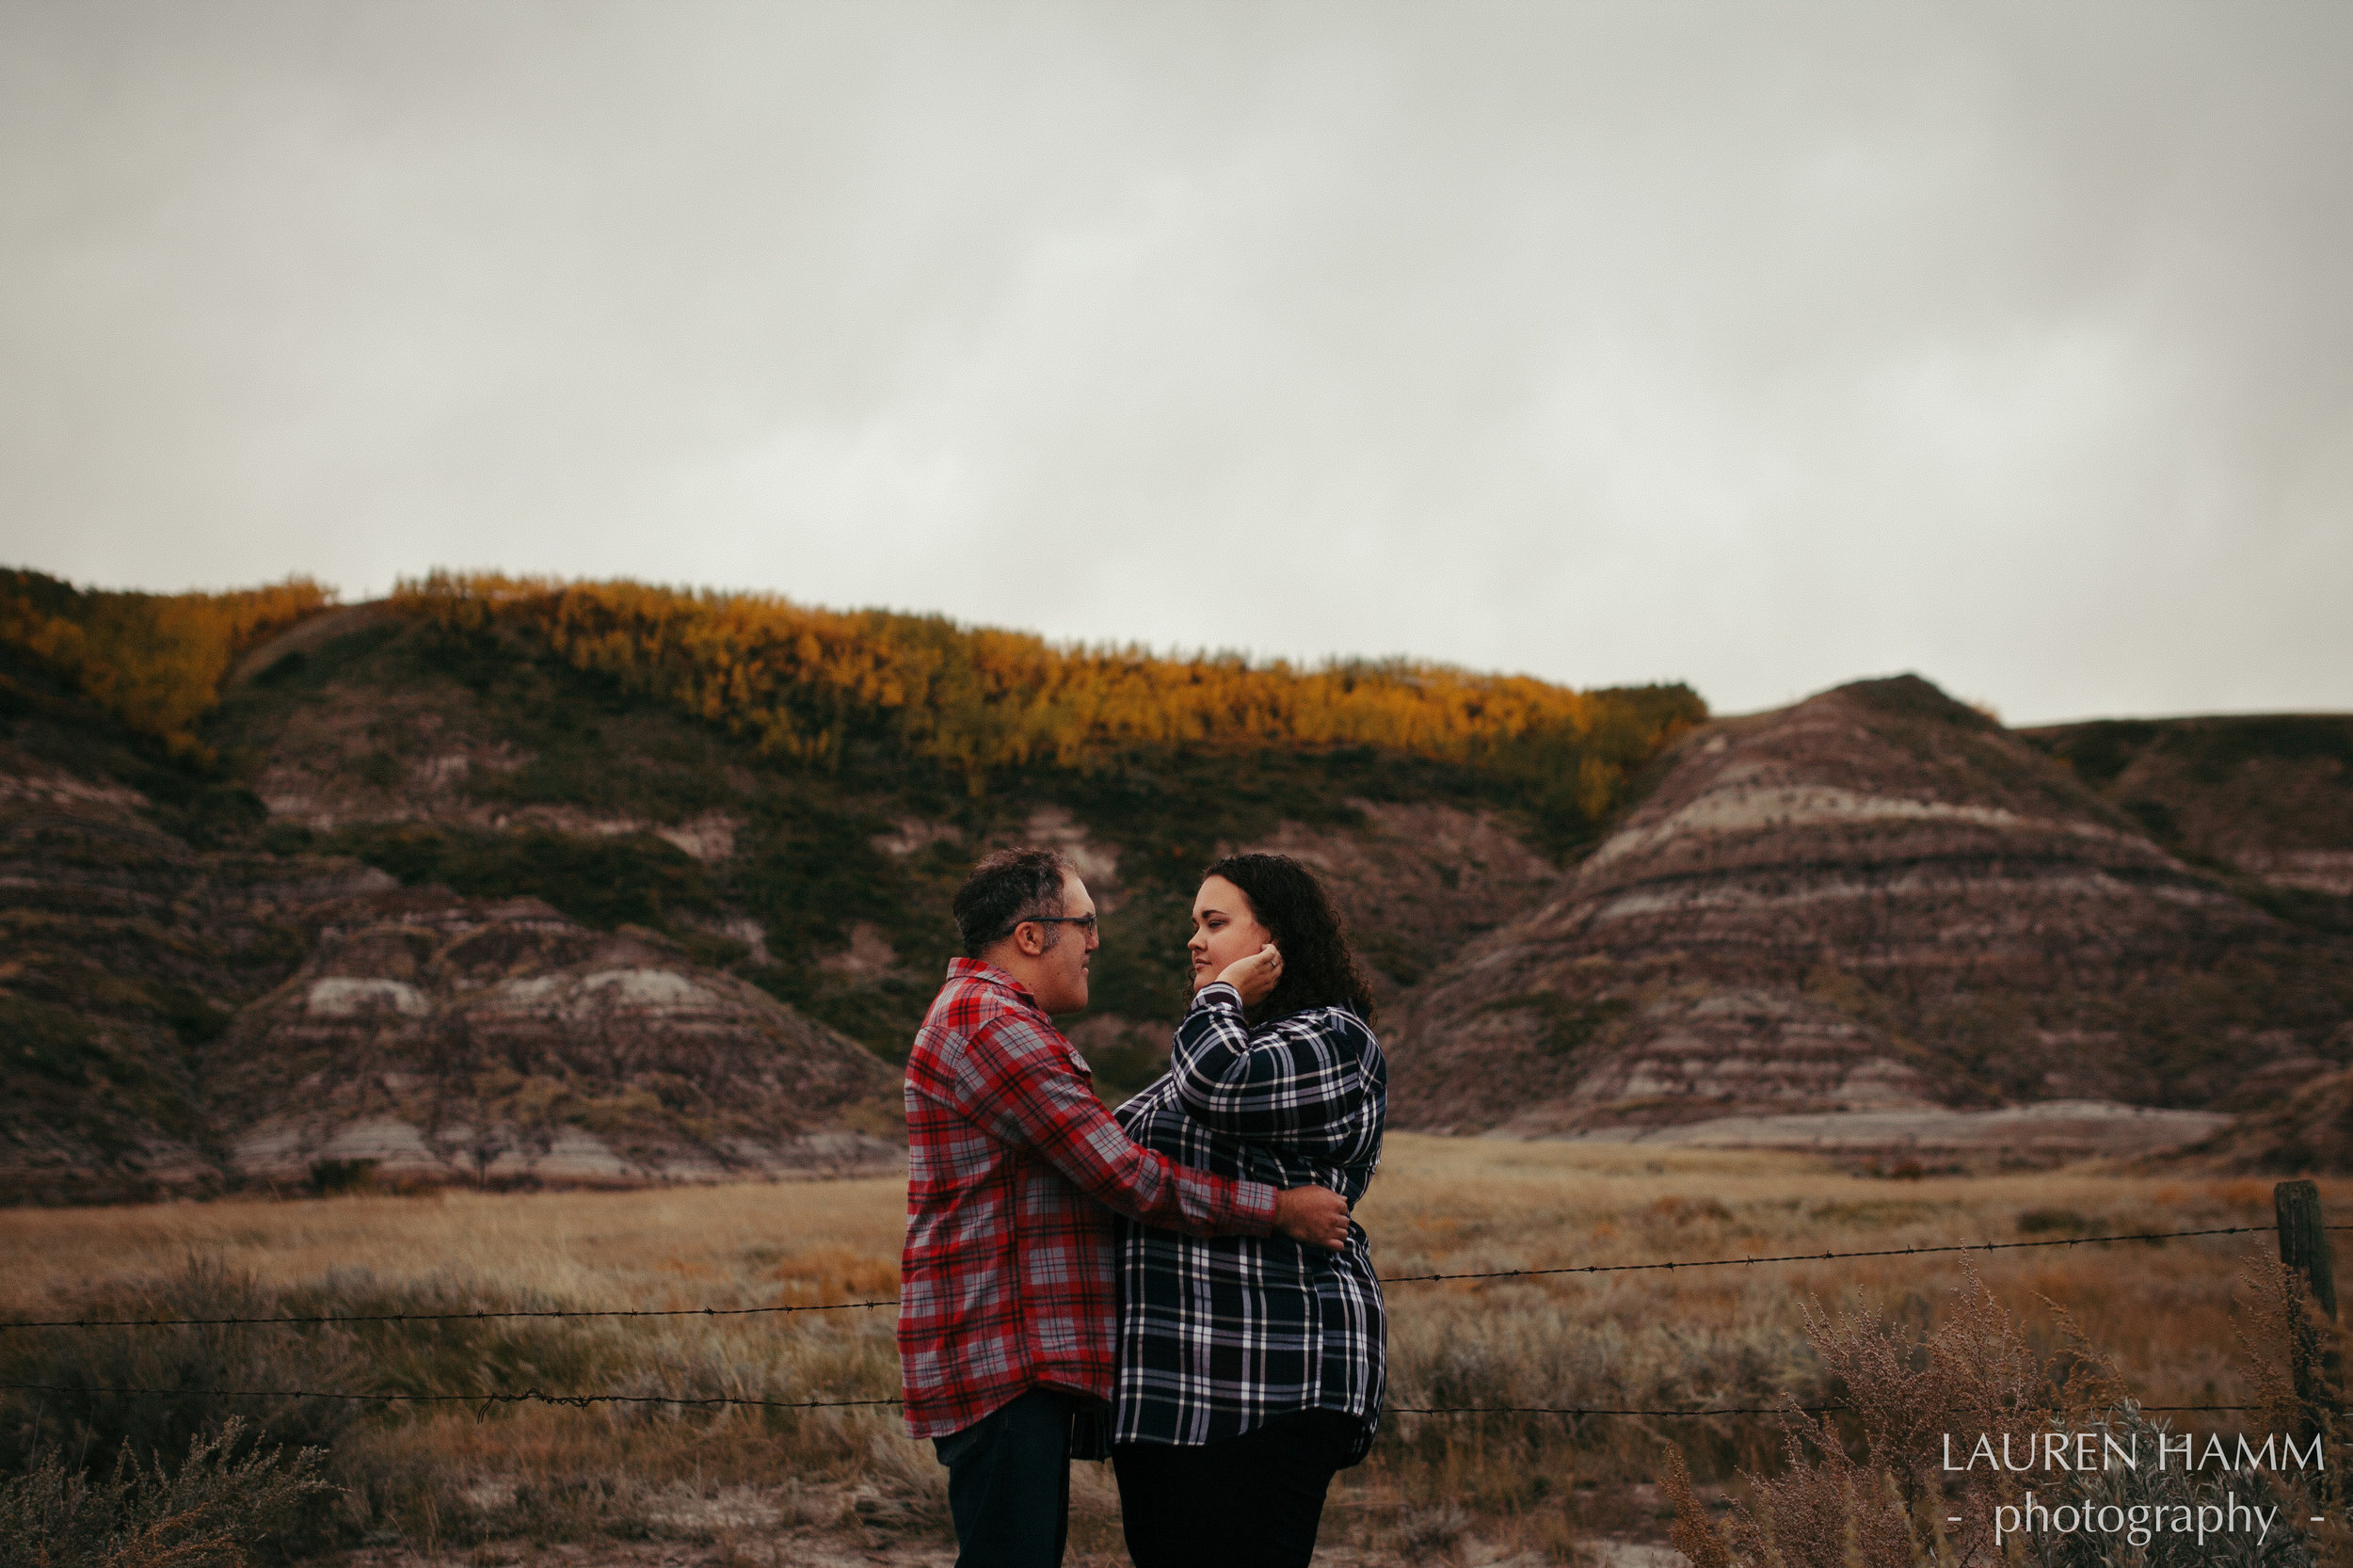 Lauren Hamm Photography | Alberta Photographer | YYC Photographer | Alberta Wedding Photographer | YYC